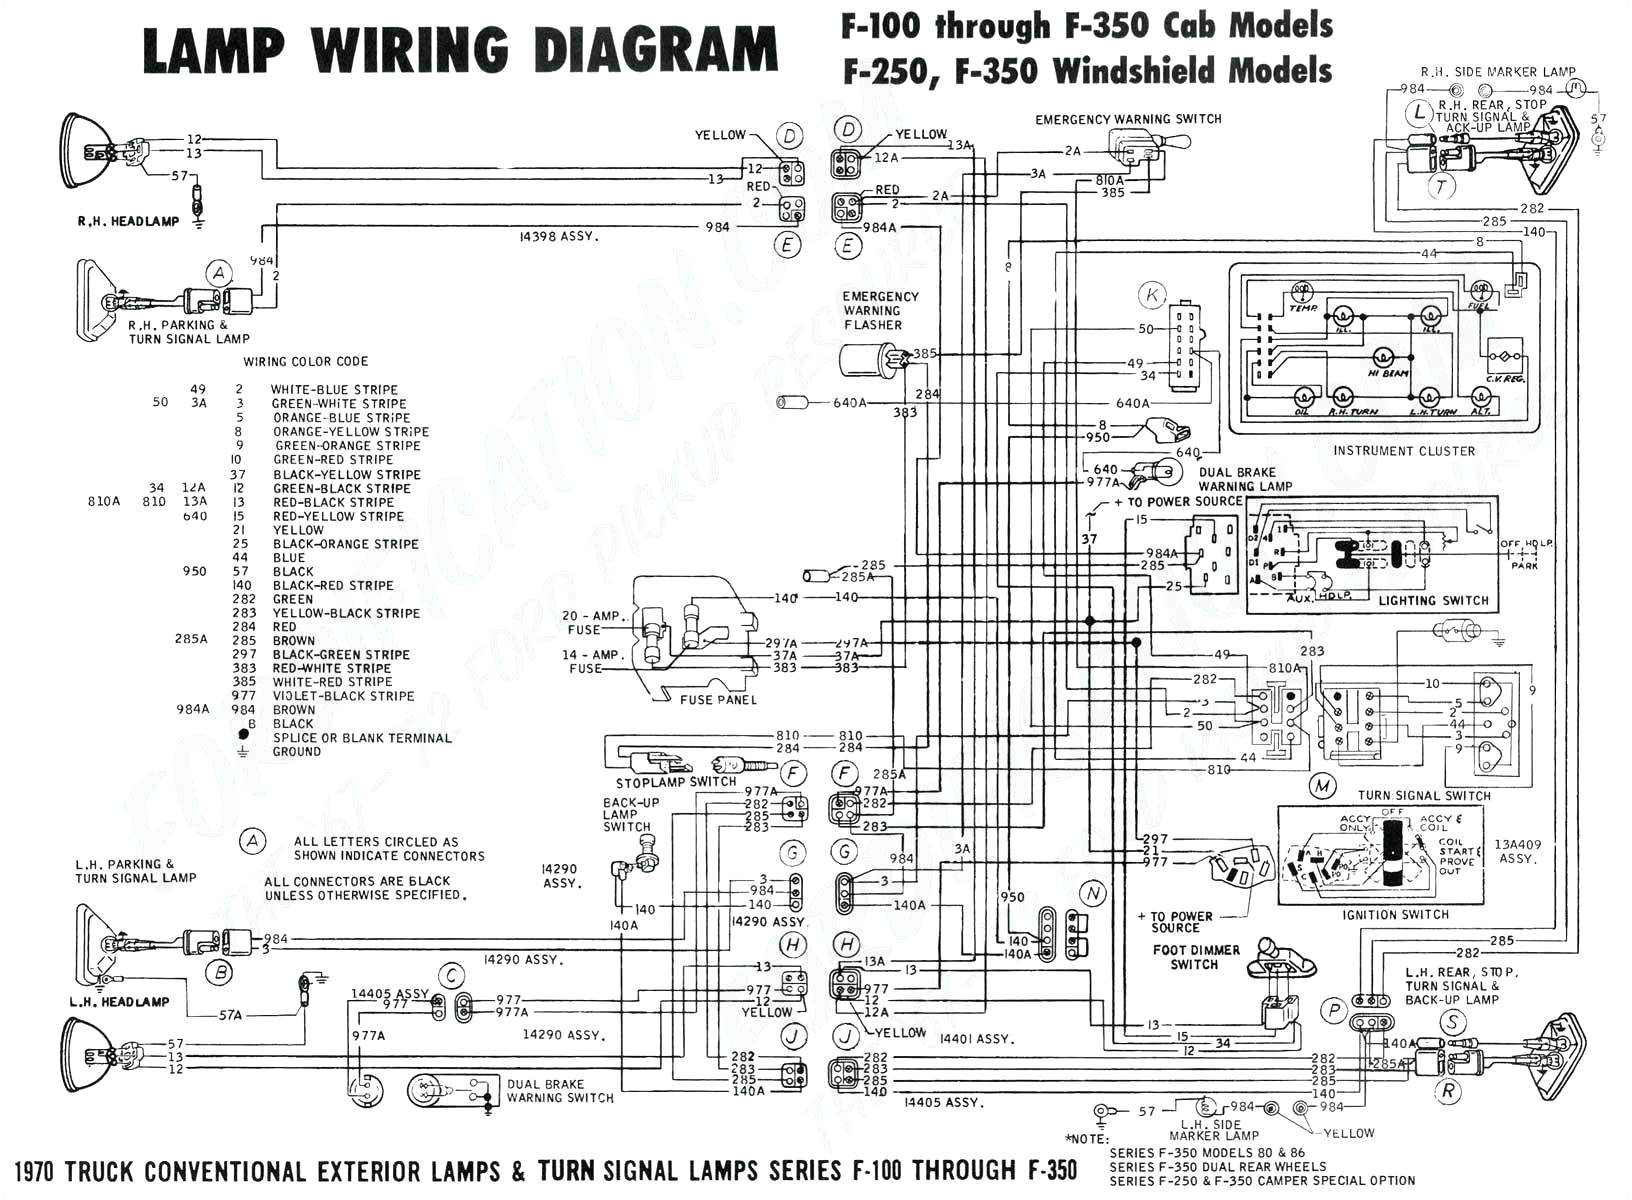 dorman 85936 wiring diagram new dorman starter switch wiring diagram library wiring diagrams